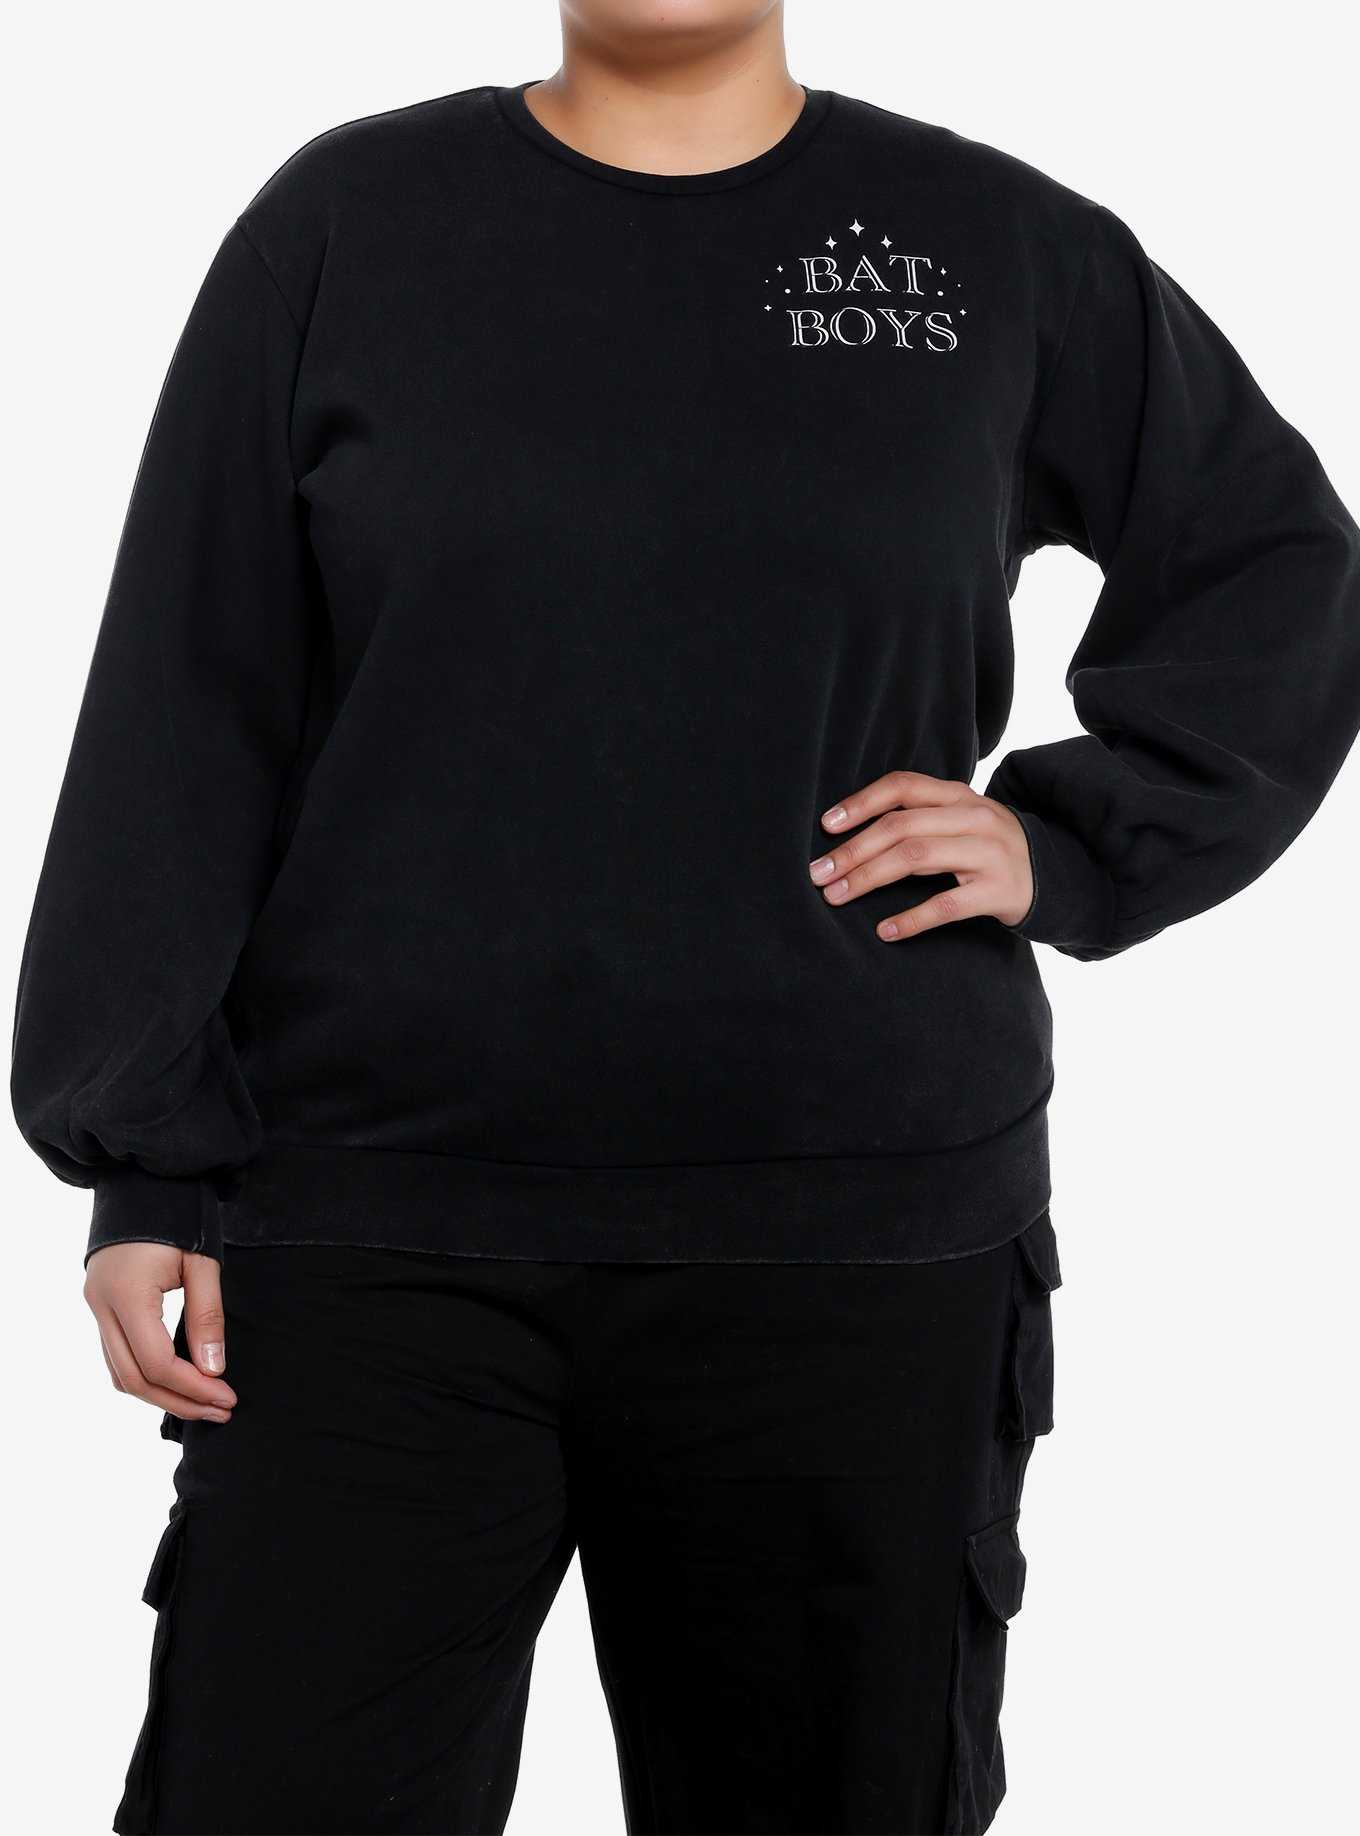 Brown Open Knit Girls Sweater Tank Top Plus Size